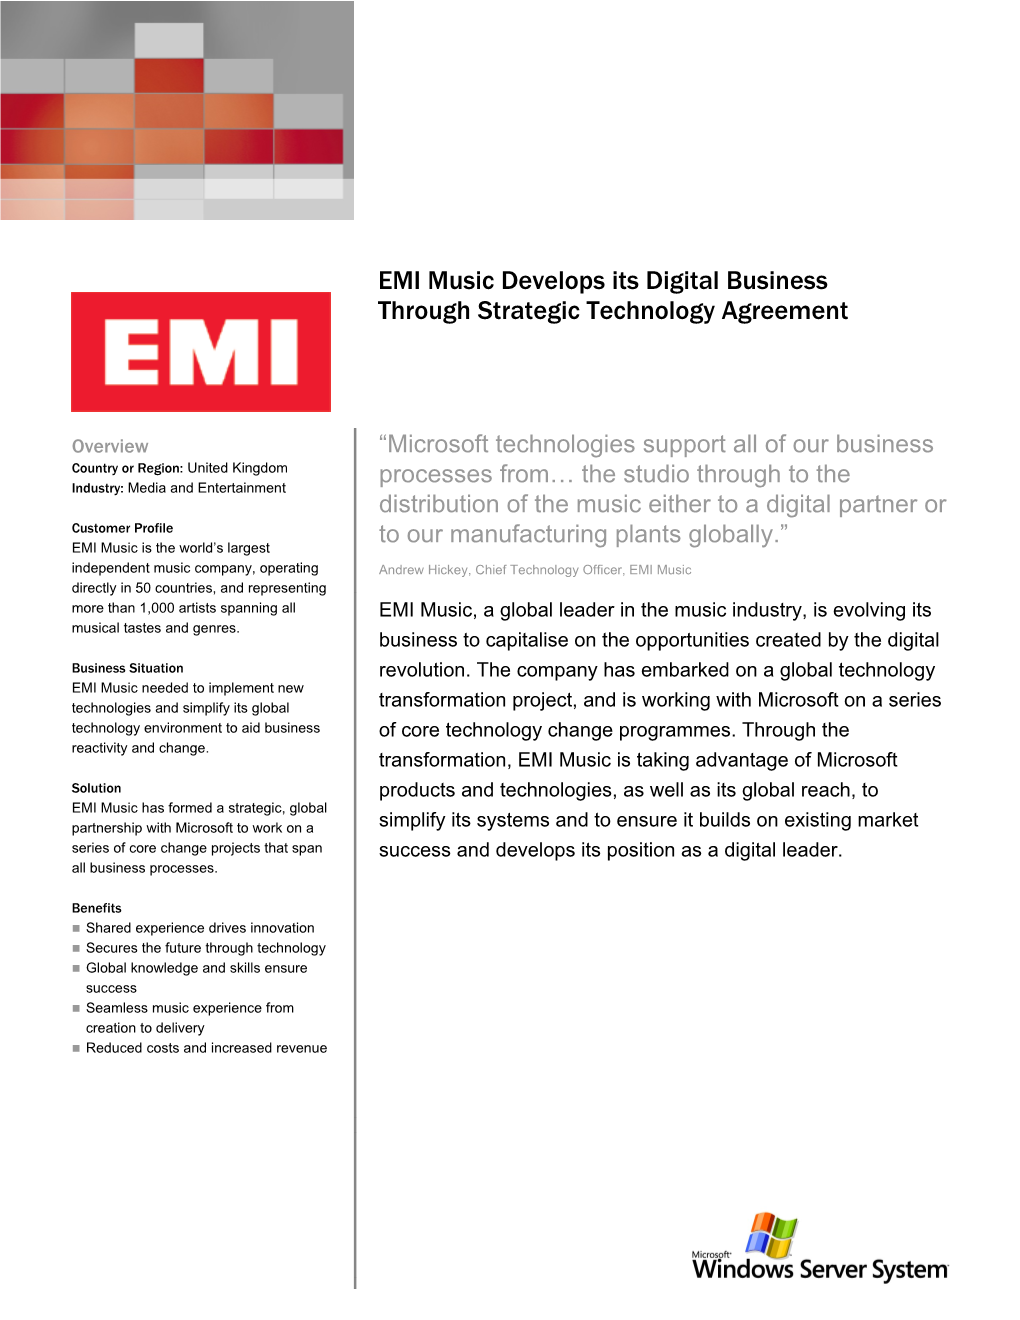 EMI Music Develops Its Digital Business Through Strategic Technology Agreement